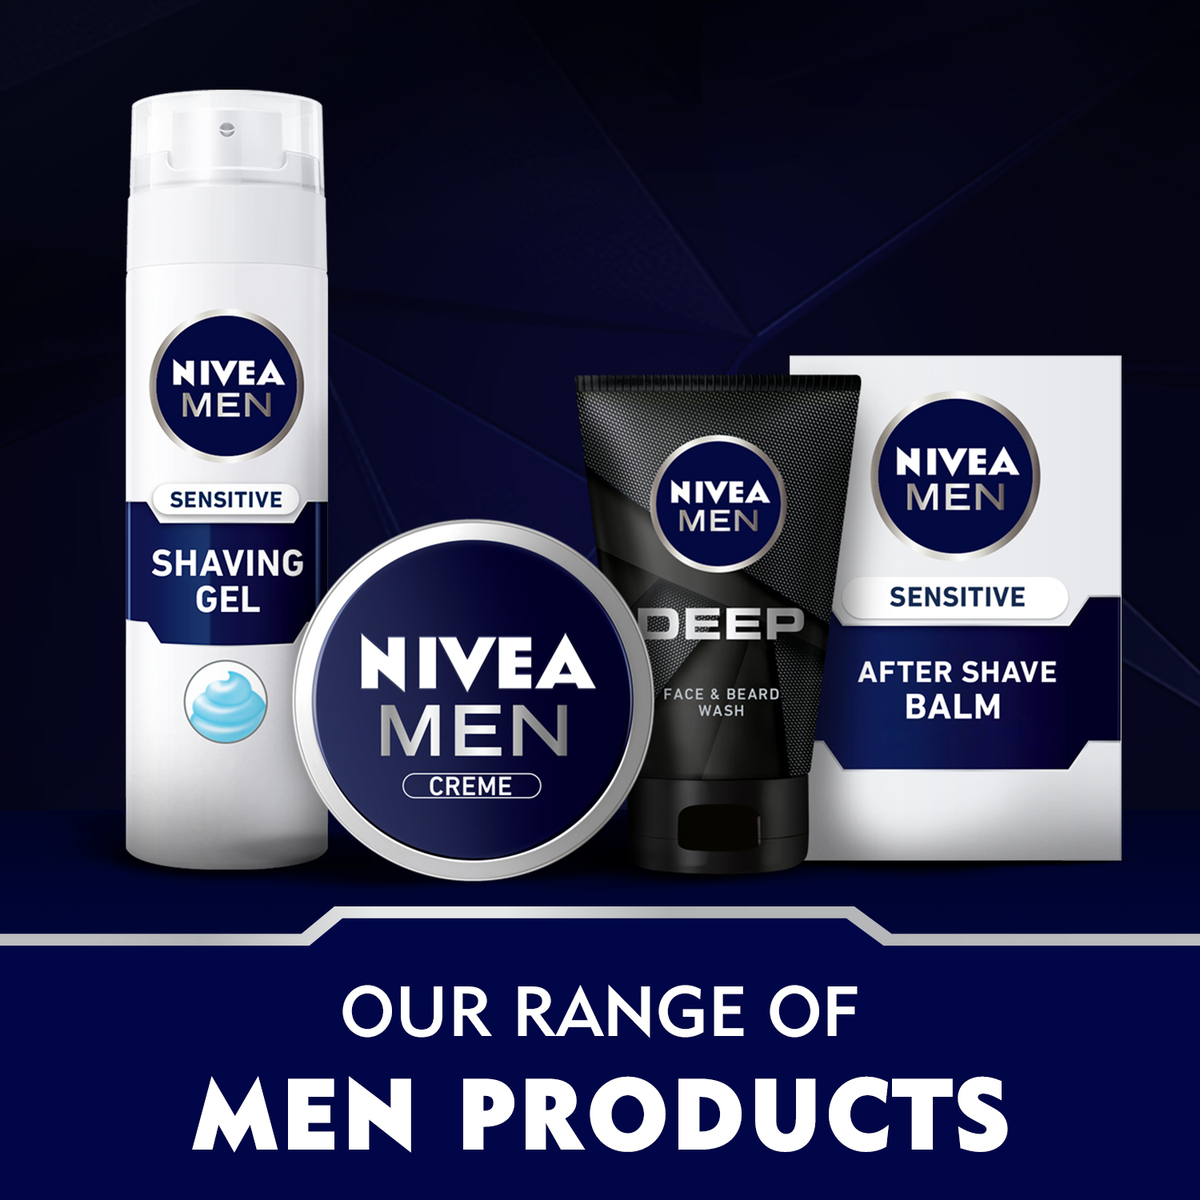 Nivea Men Shaving Foam Protect & Care 200 ml